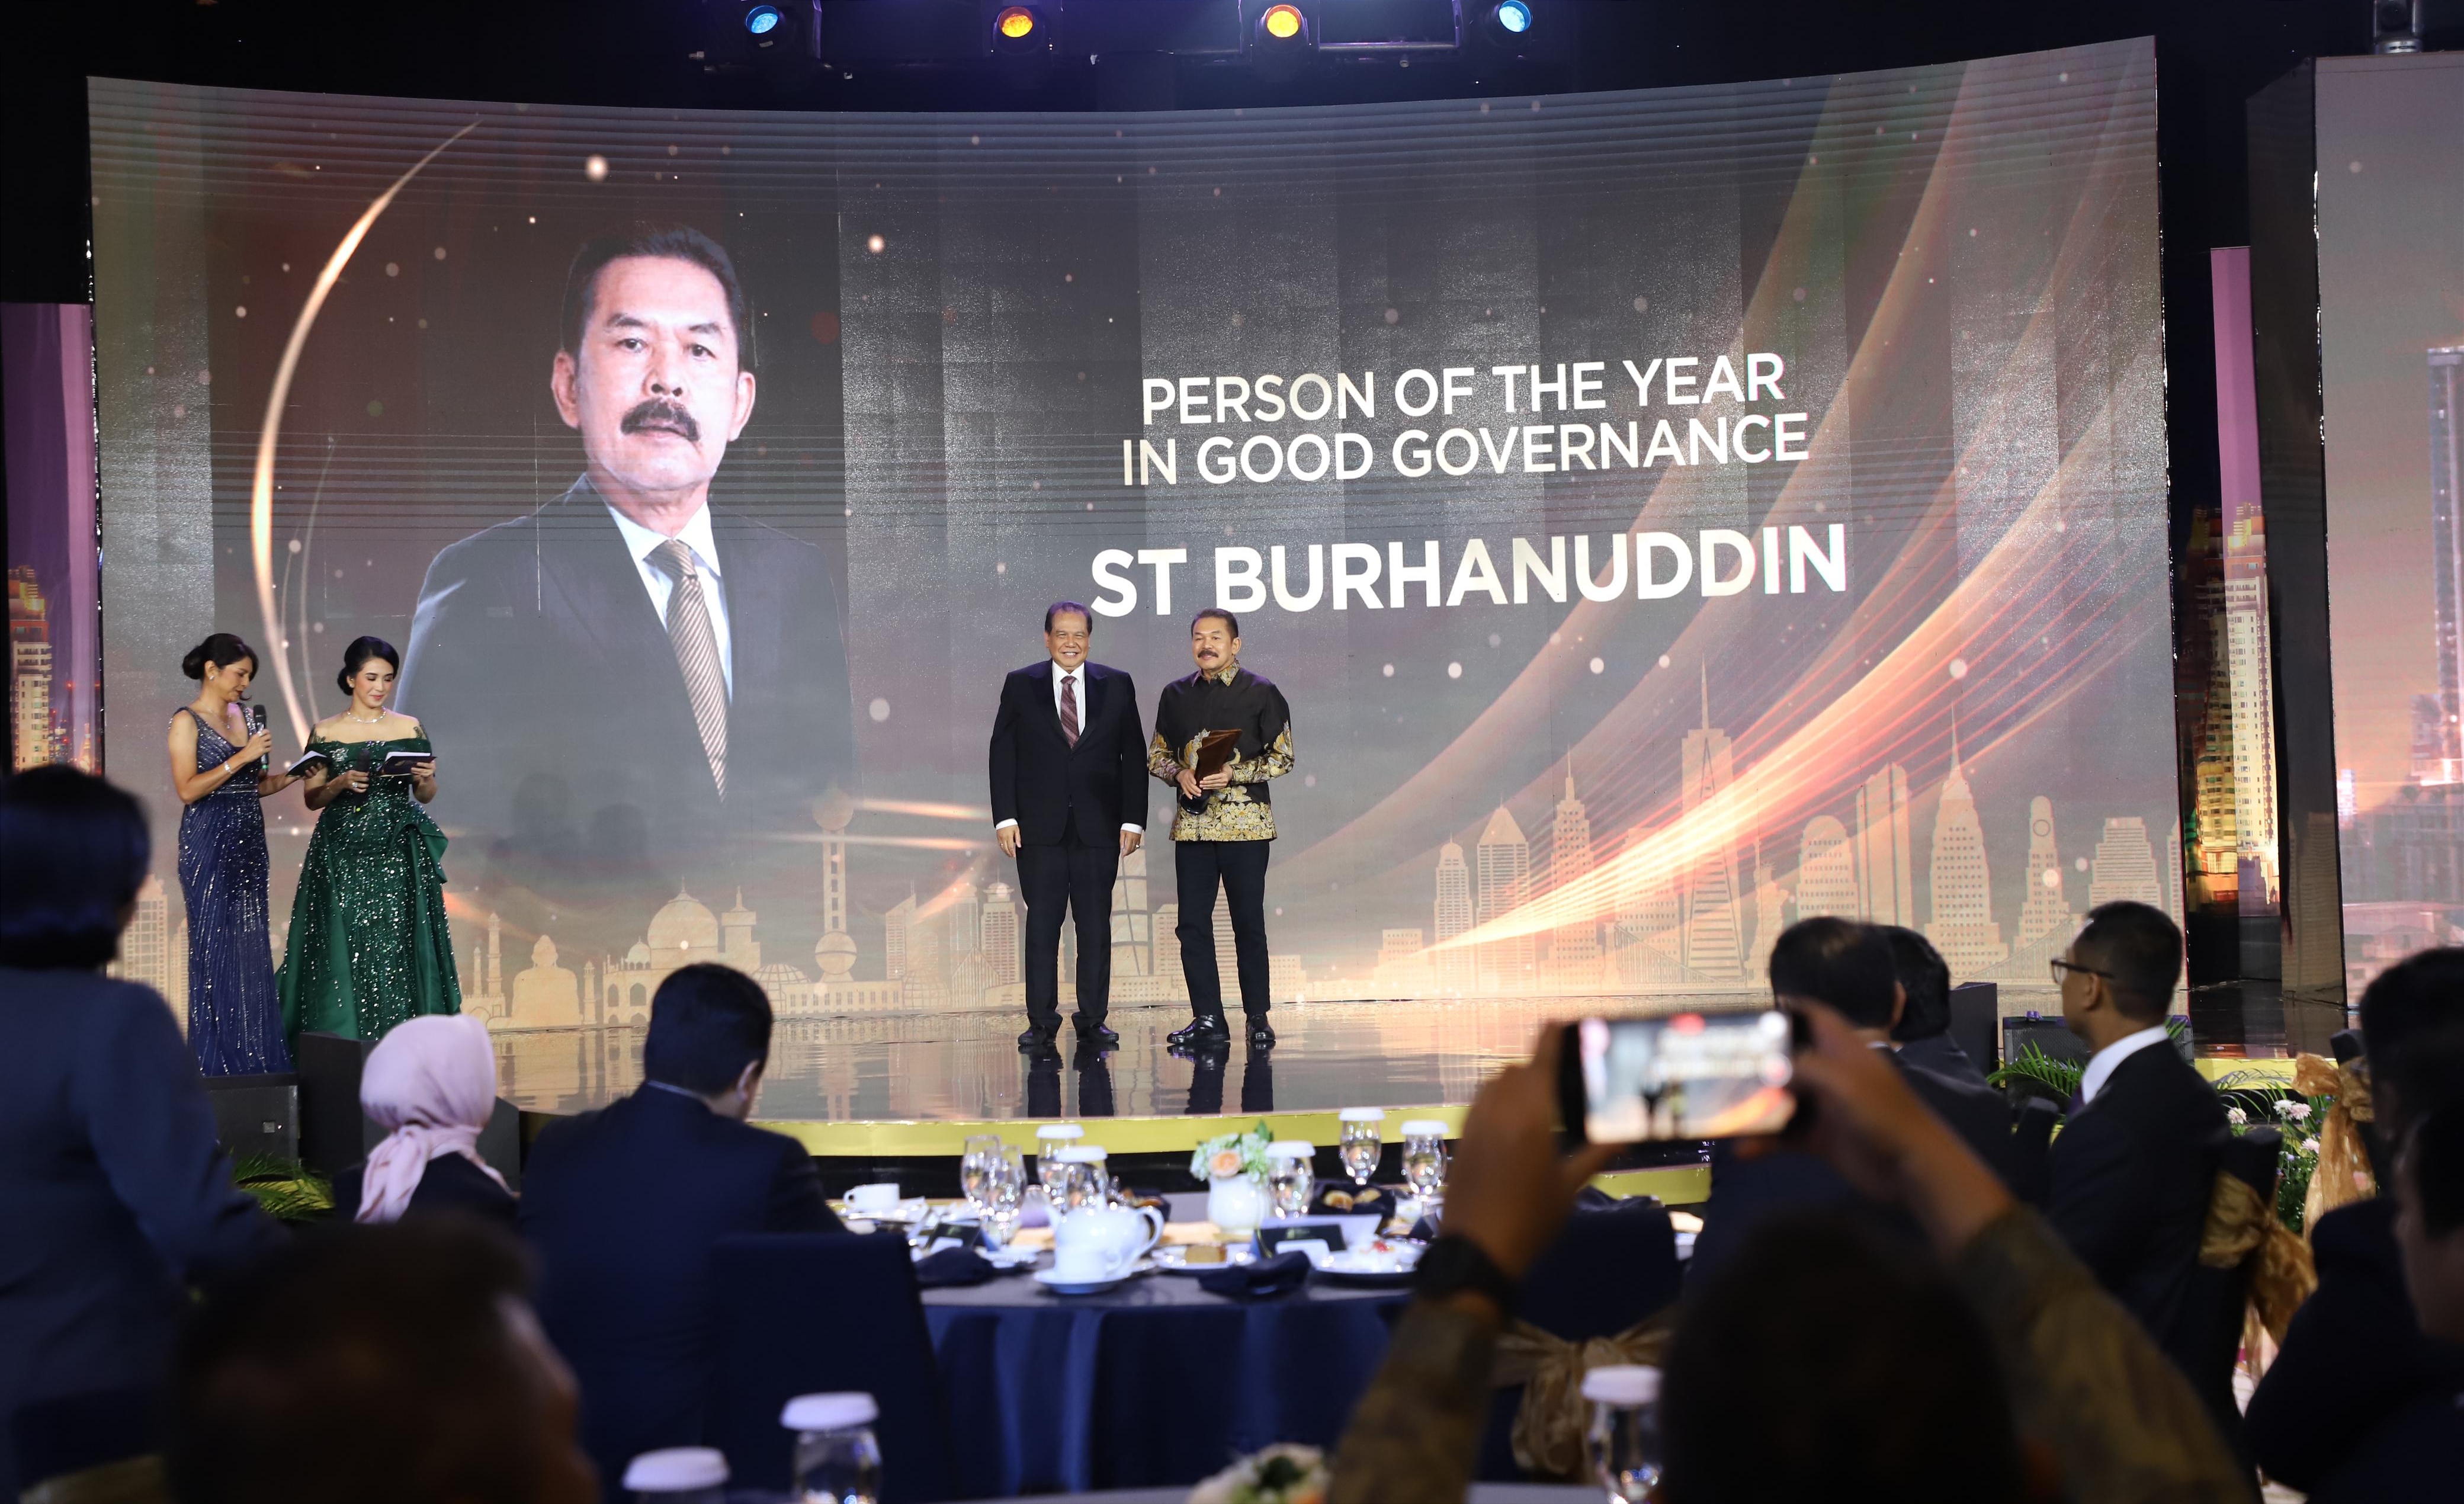 Jaksa Agung ST Burhanuddin Terima Penghargaan Person of The Year in Good Governance